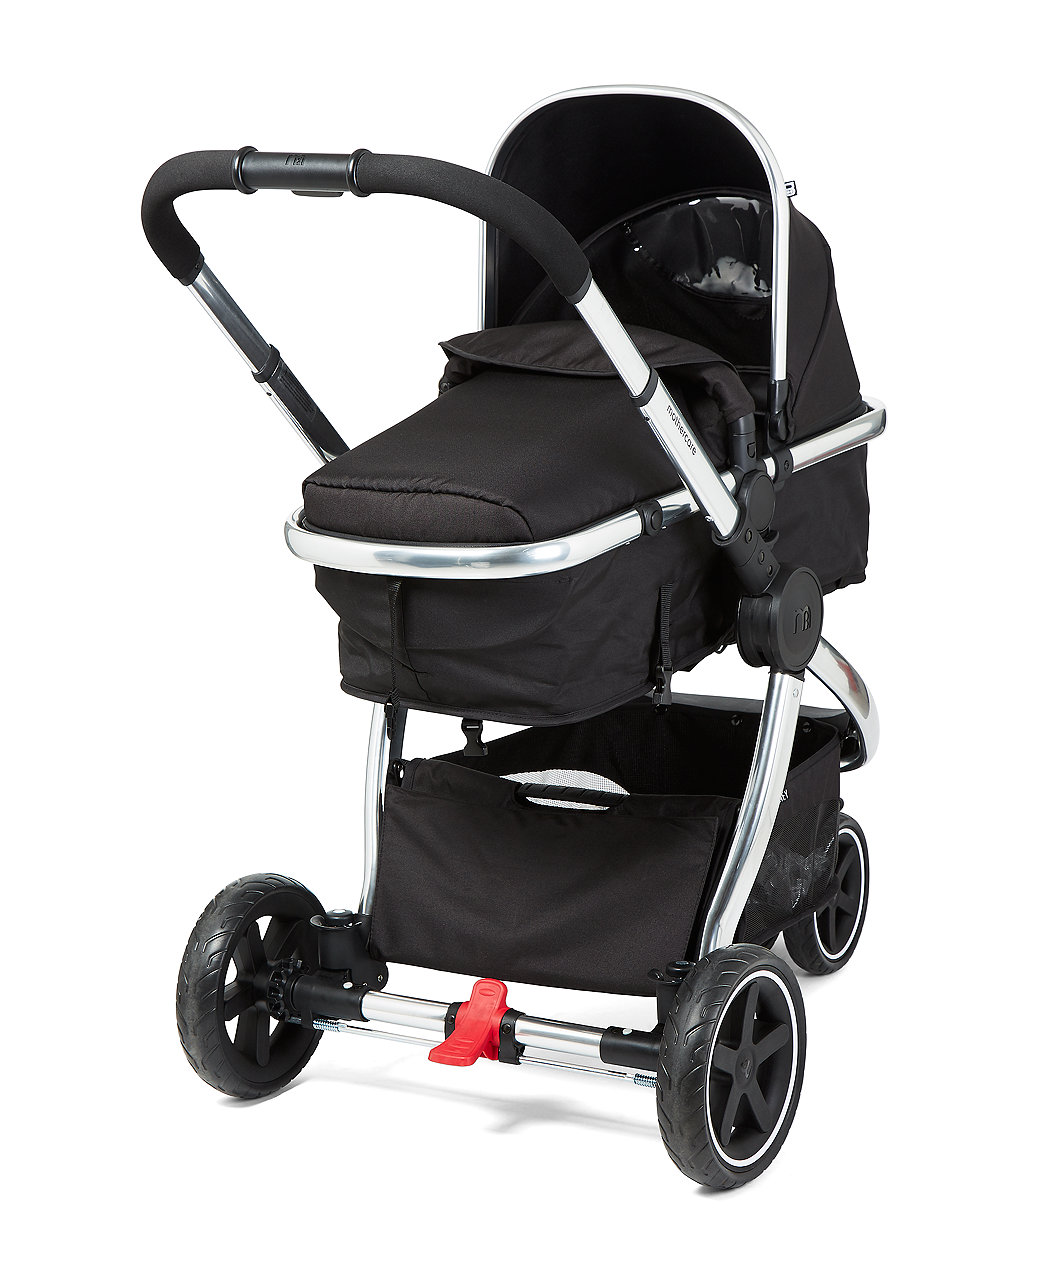 mothercare journey stroller